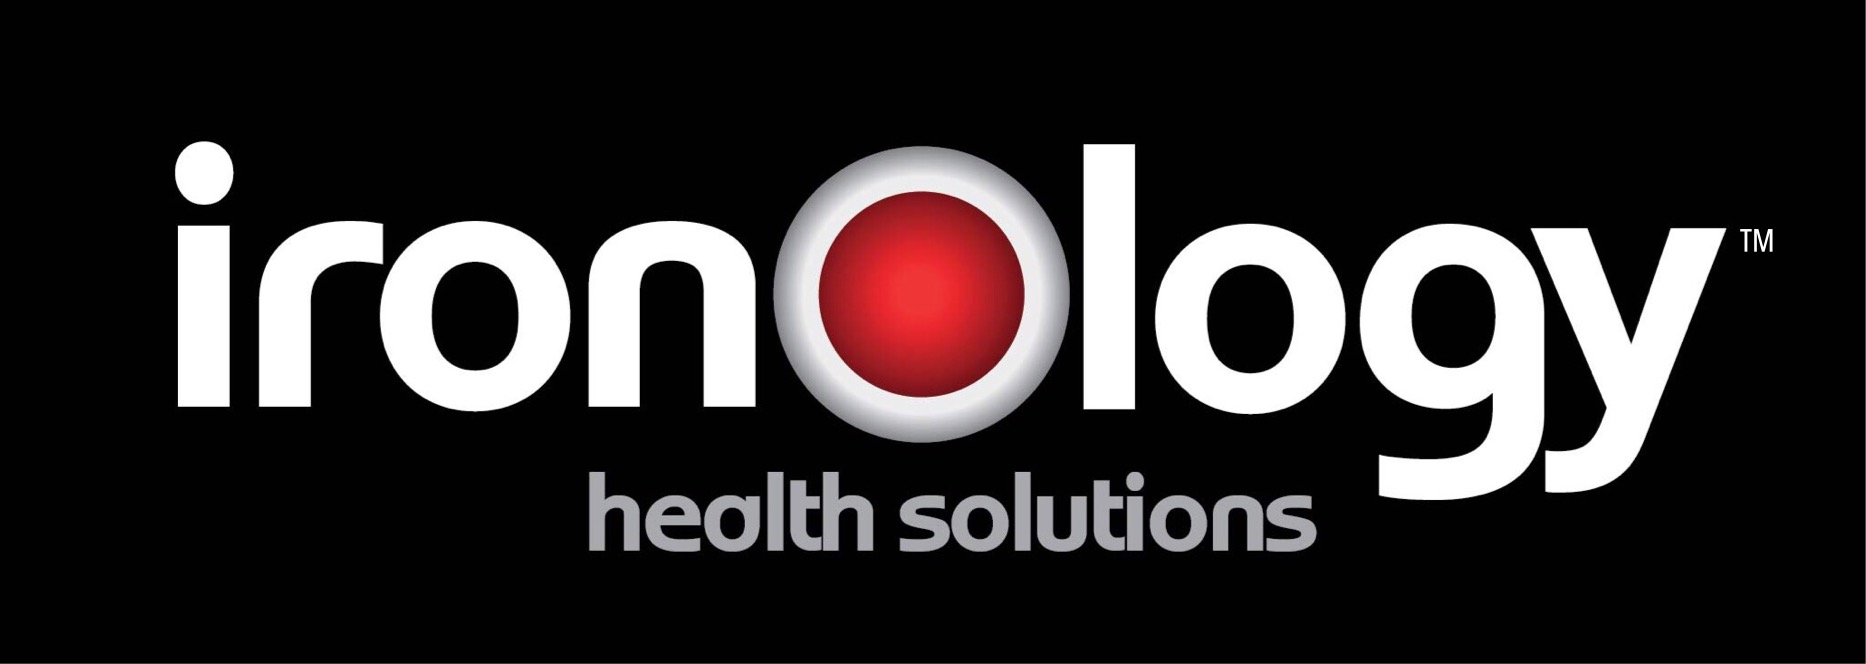 ironology health solutions logo